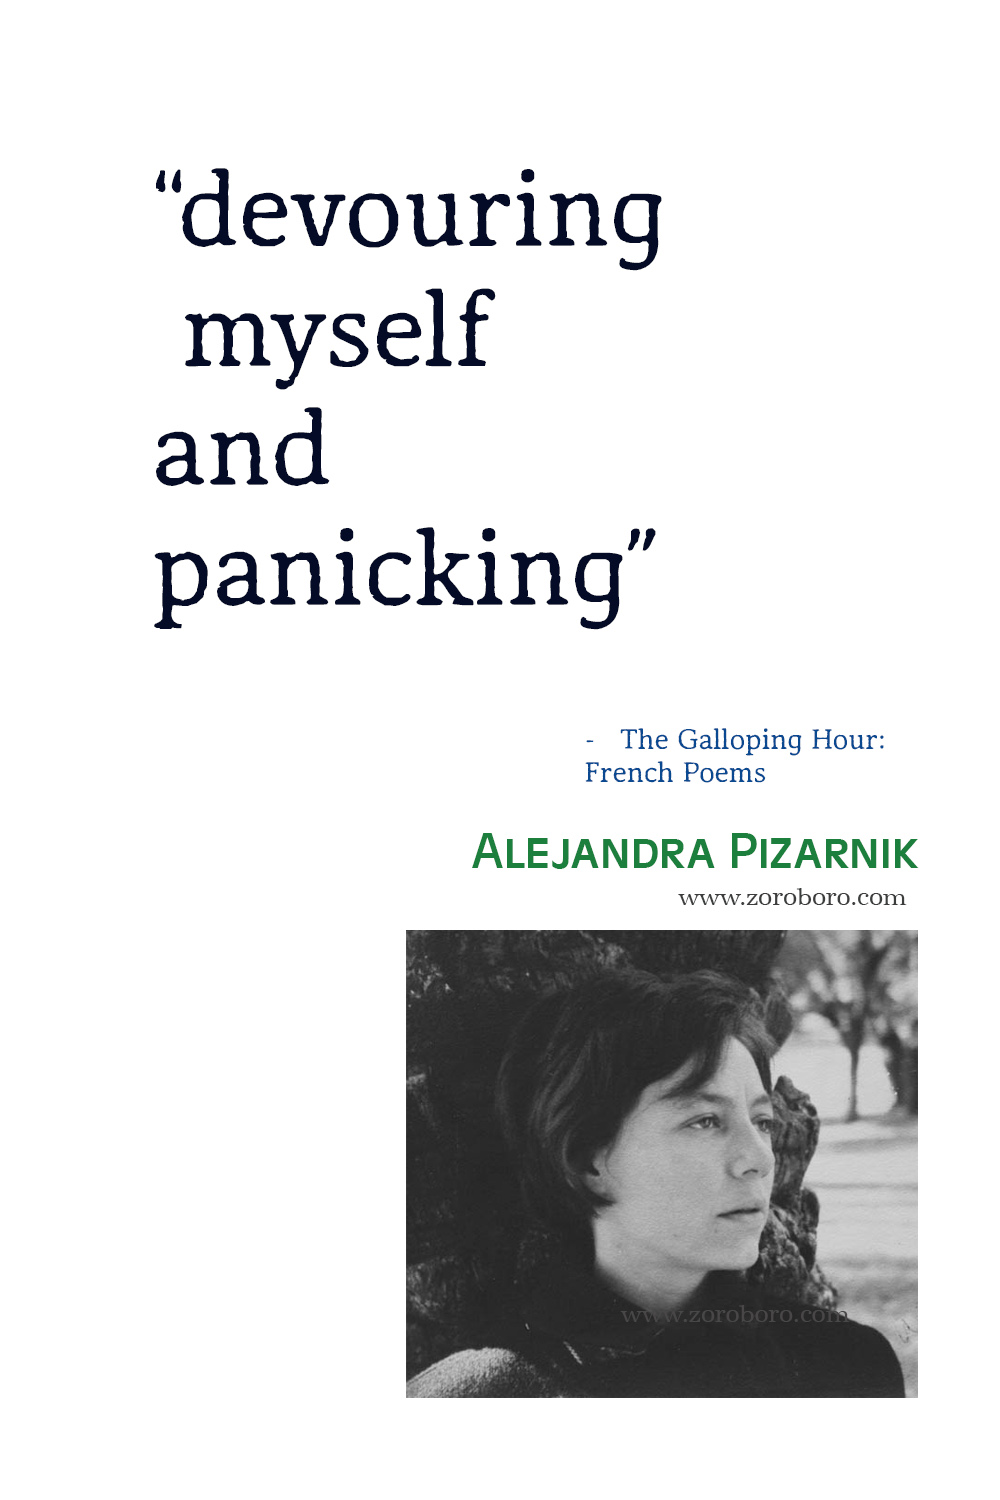 Alejandra Pizarnik Quotes, Alejandra Pizarnik, The Galloping Hour: French Poems, Alejandra Pizarnik Poemas, Poemas De Amor.